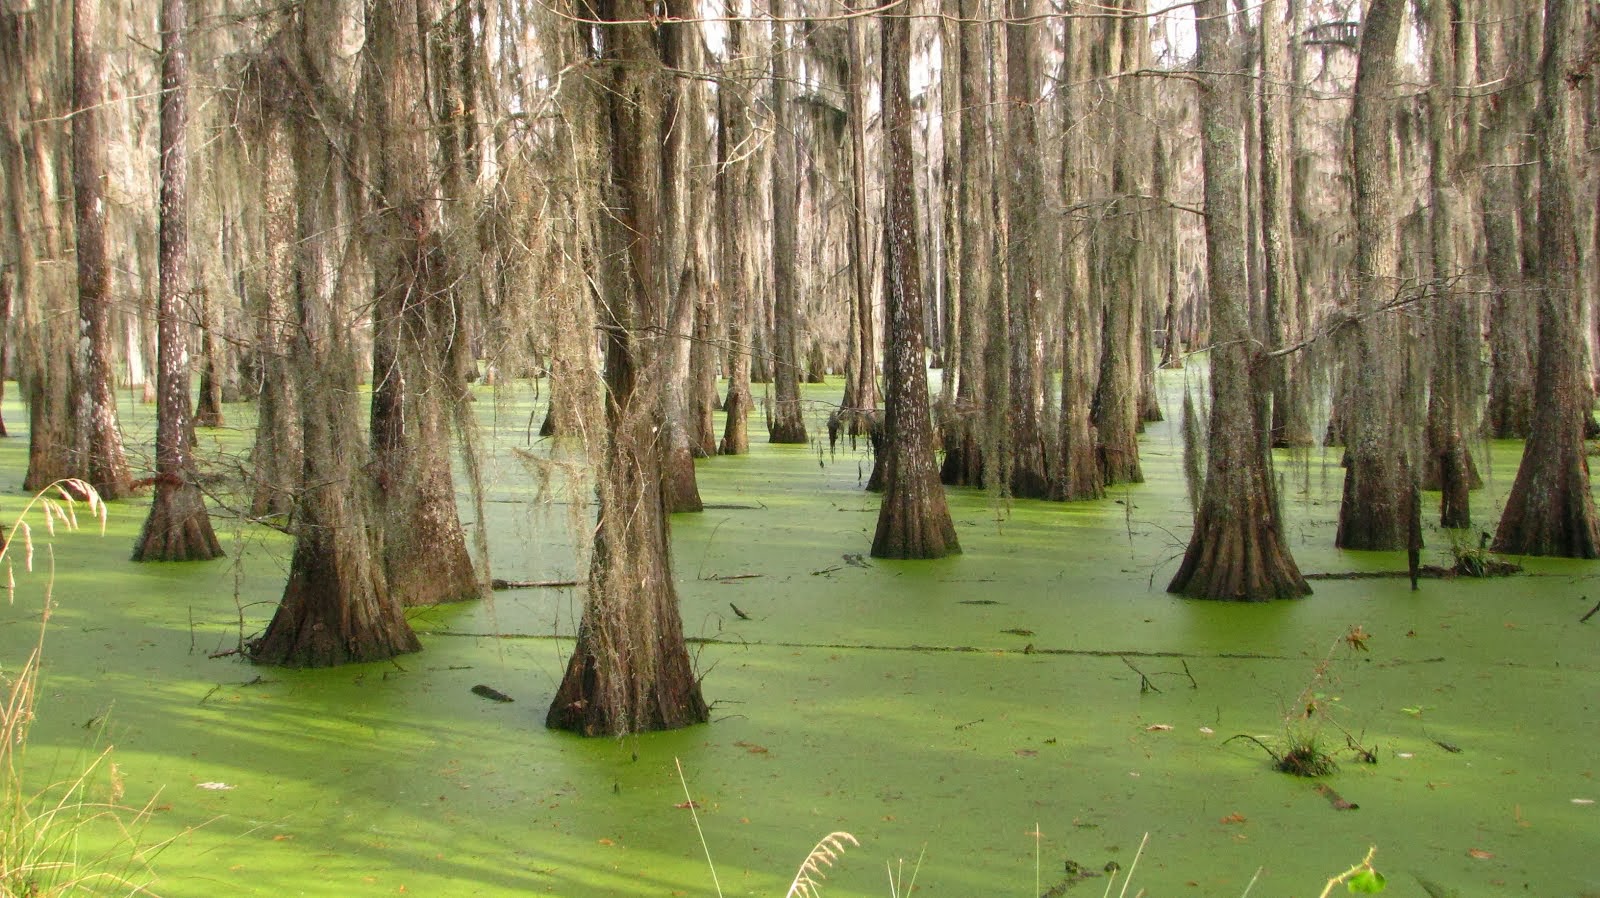 Halfway Swamp, South Carolina BEFORE THE FLOOD OF 2015